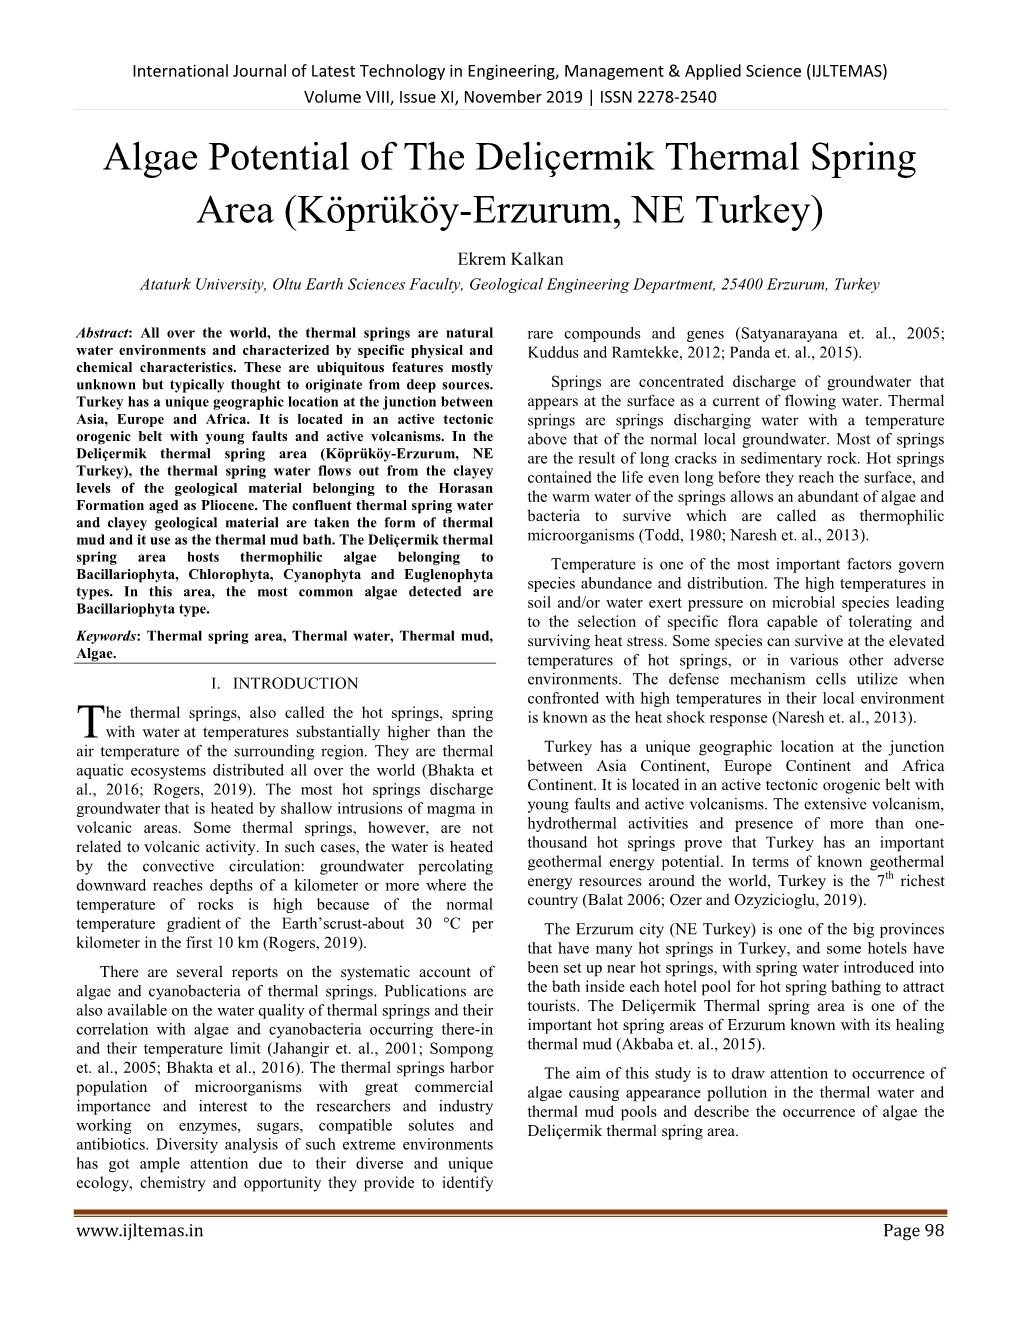 Algae Potential of the Deliçermik Thermal Spring Area (Köprüköy-Erzurum, NE Turkey)